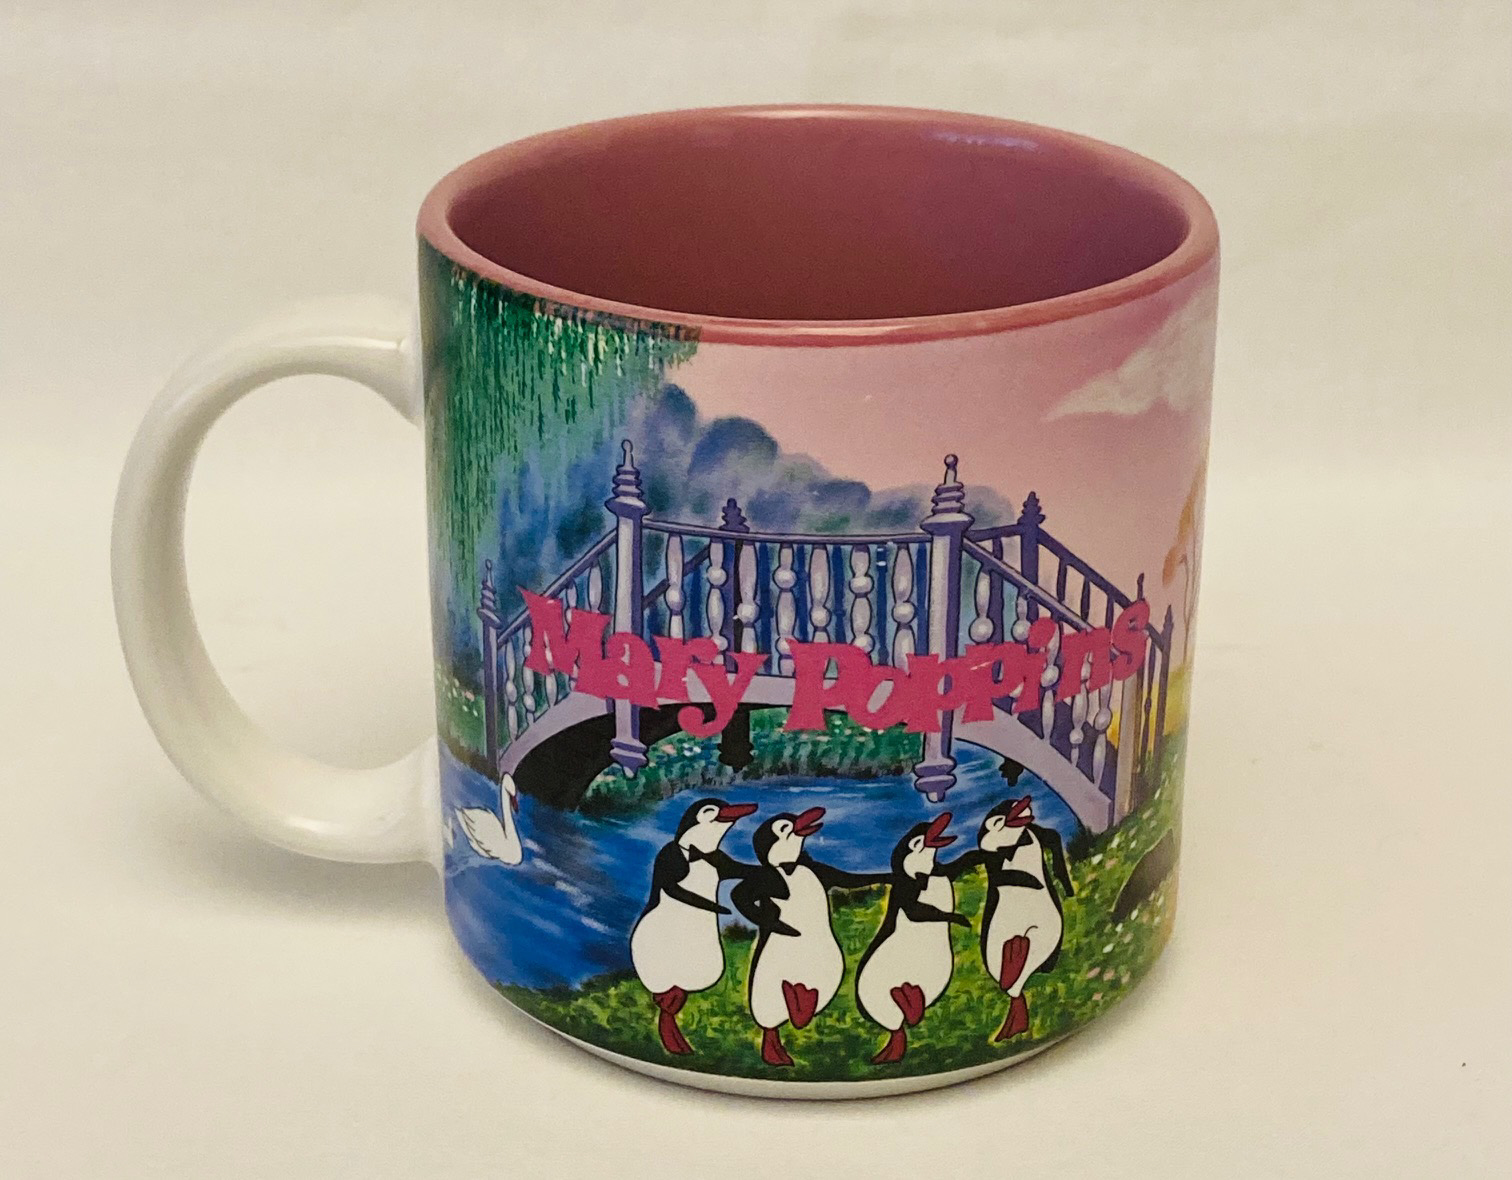 Vintage Walt Disney Mary Poppins mug 1993 pink penguins Bert htf collectible - $16.00